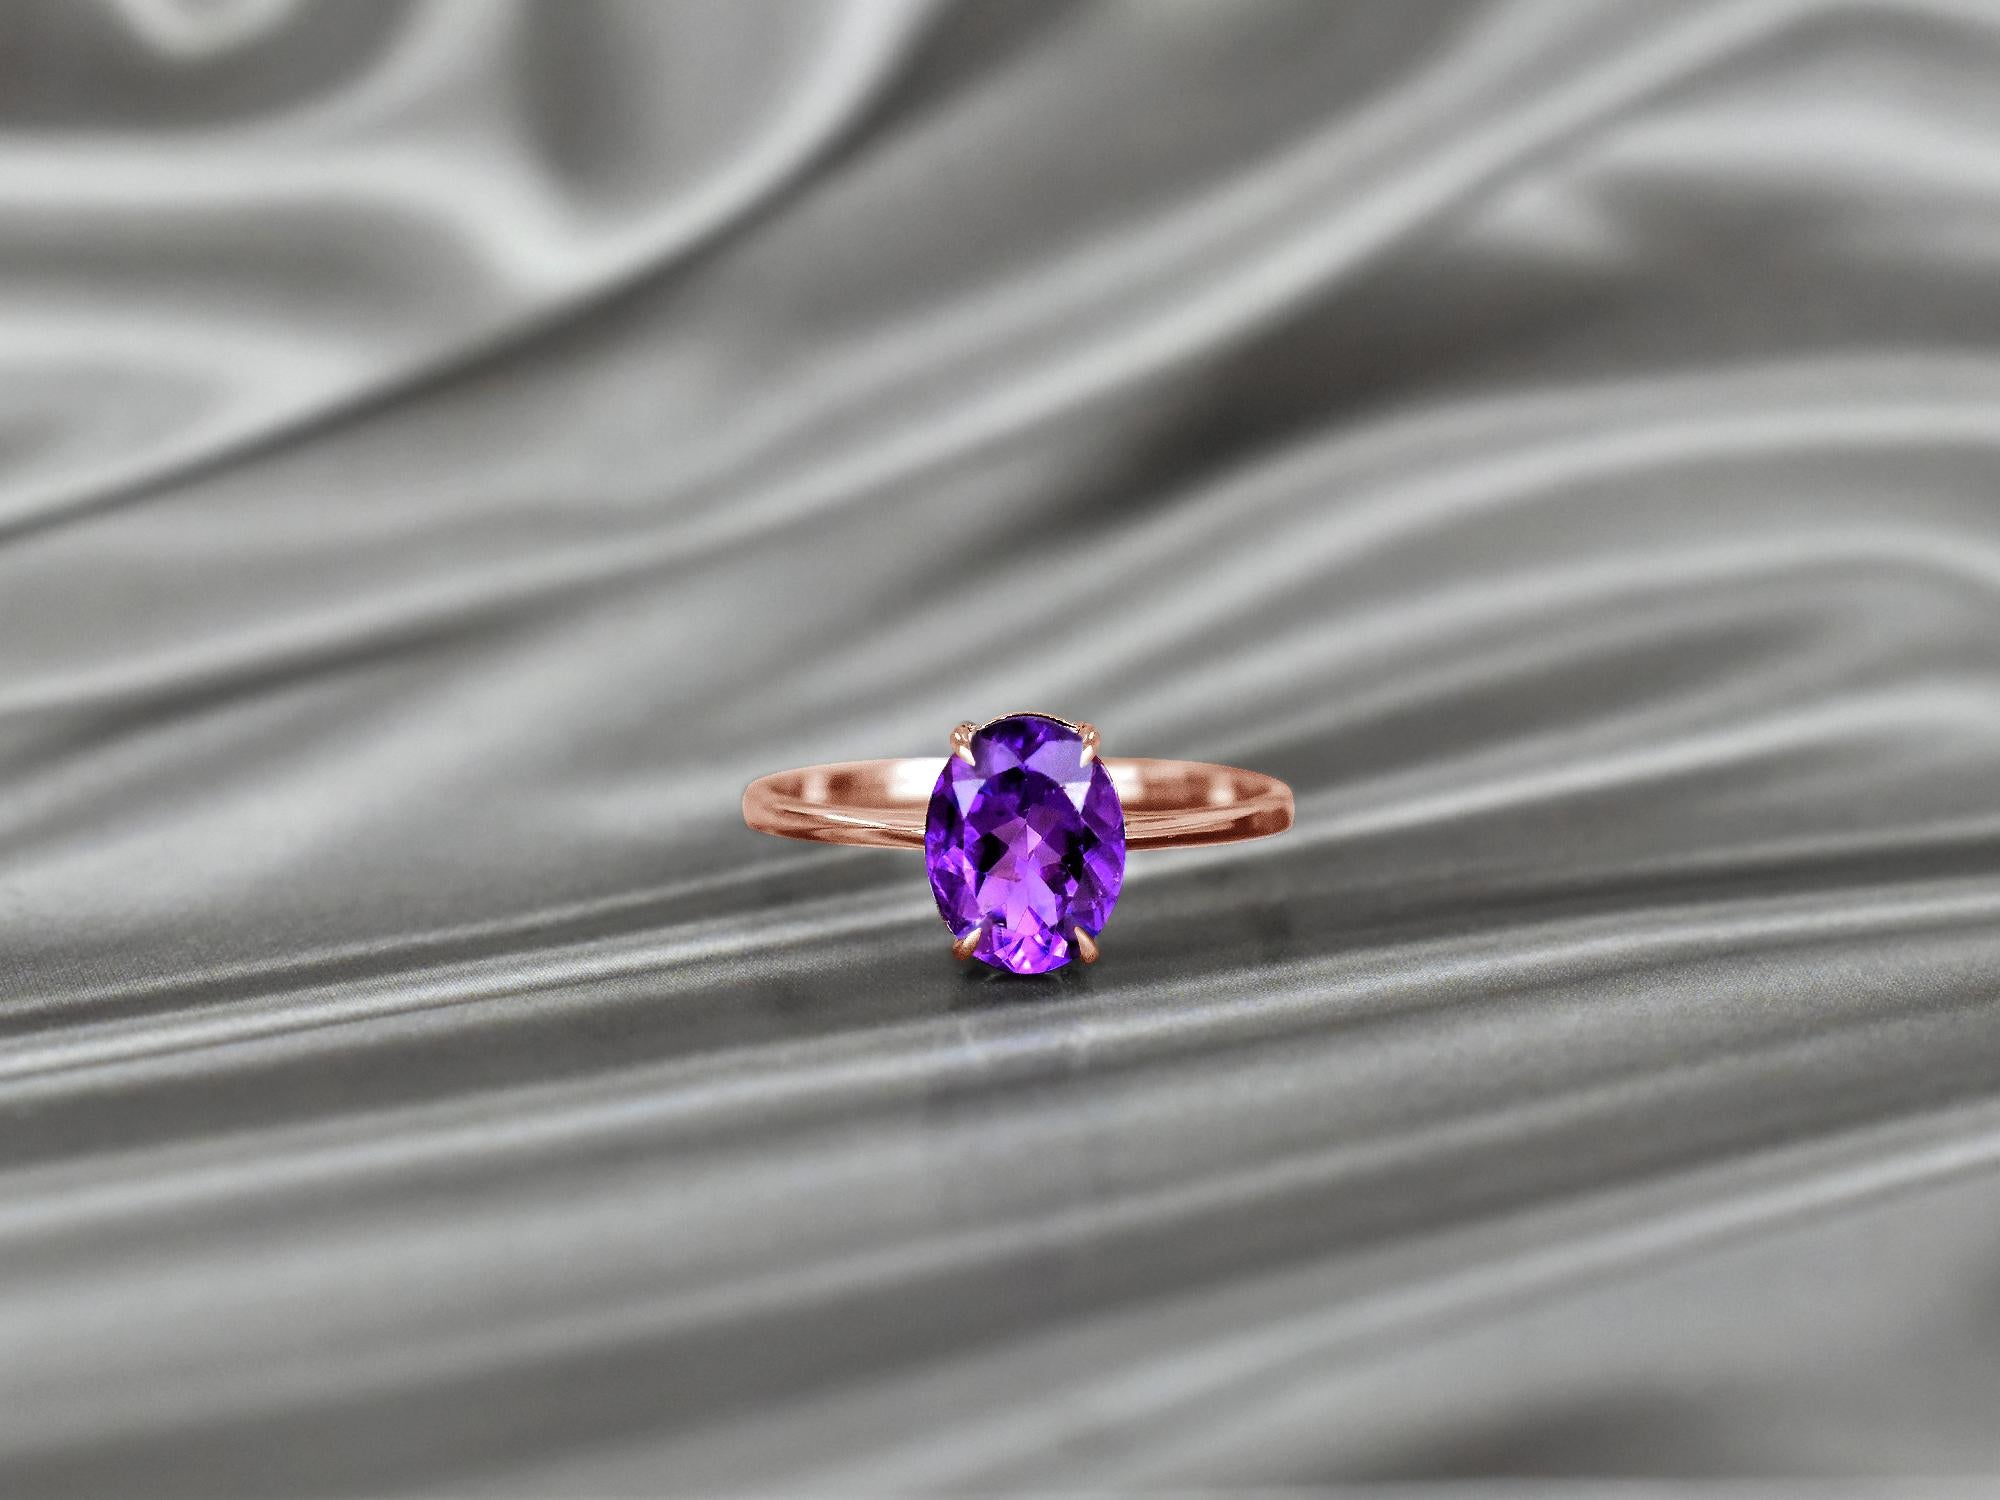 For Sale:  10k Gold Oval Gemstone 9x7 mm Oval Cut Gemstone Ring Gemstone Engagement Ring 2